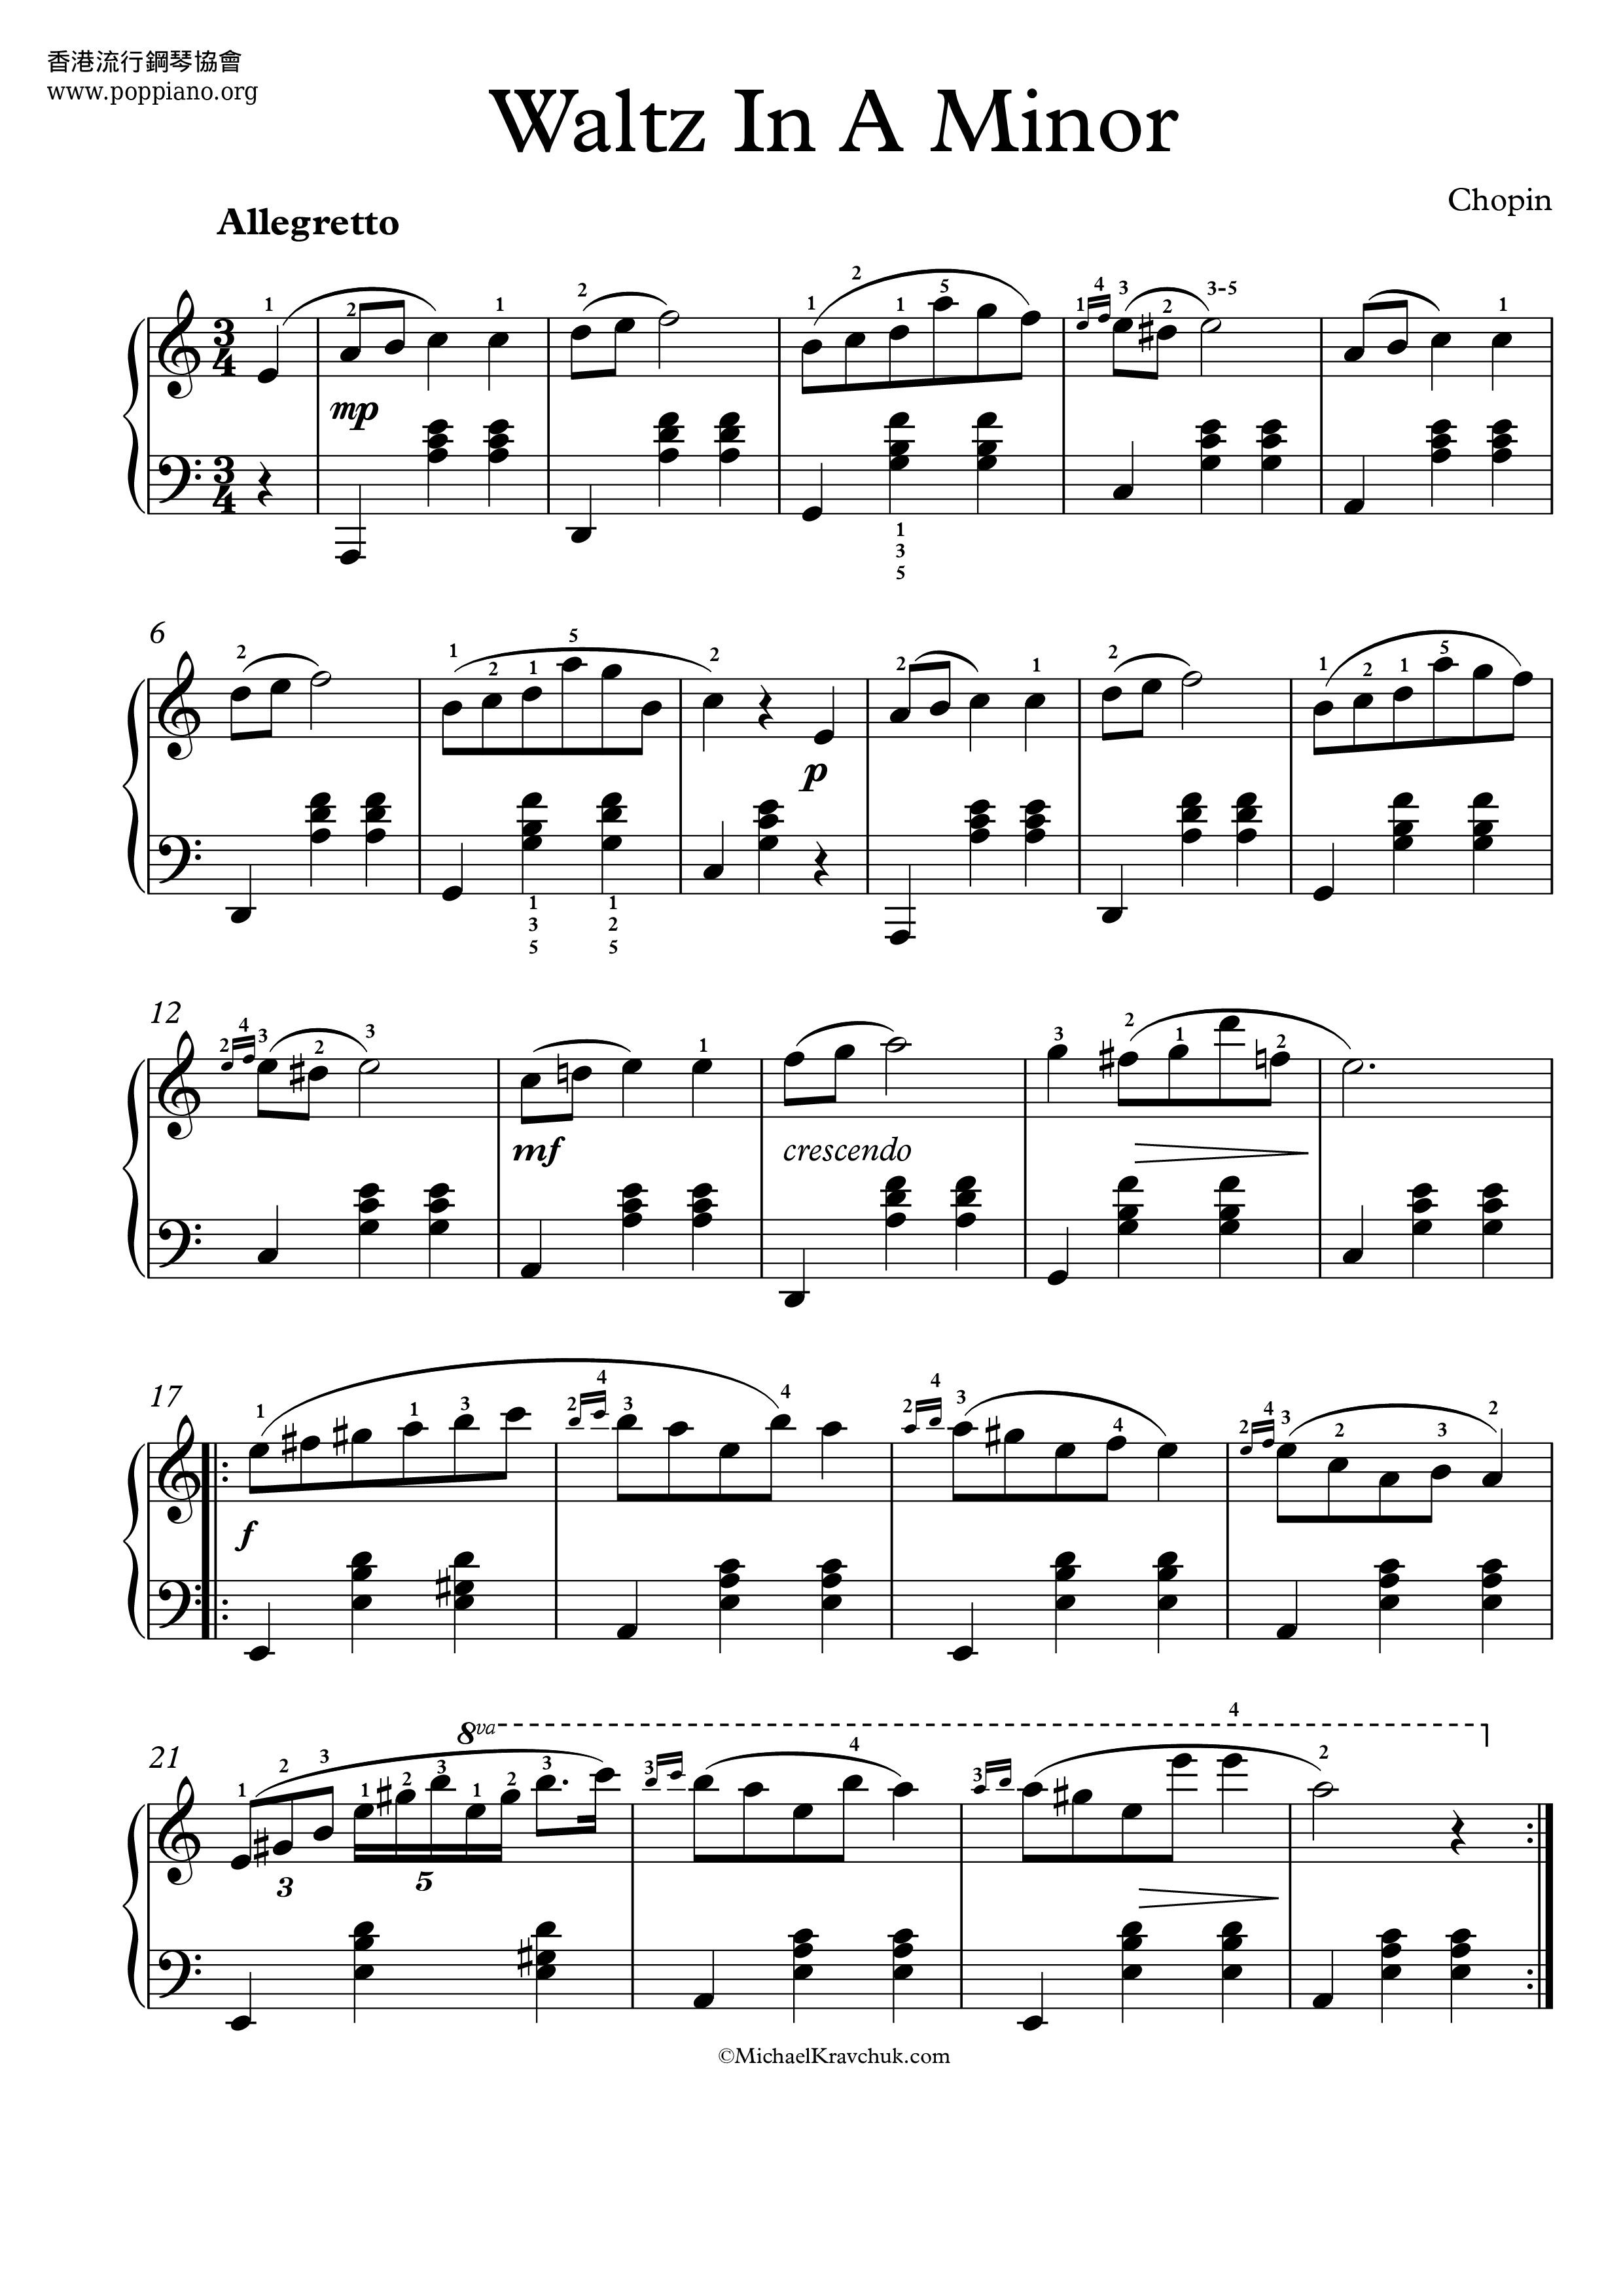 Waltz in A Minor, Op. Posth., B. 150琴譜